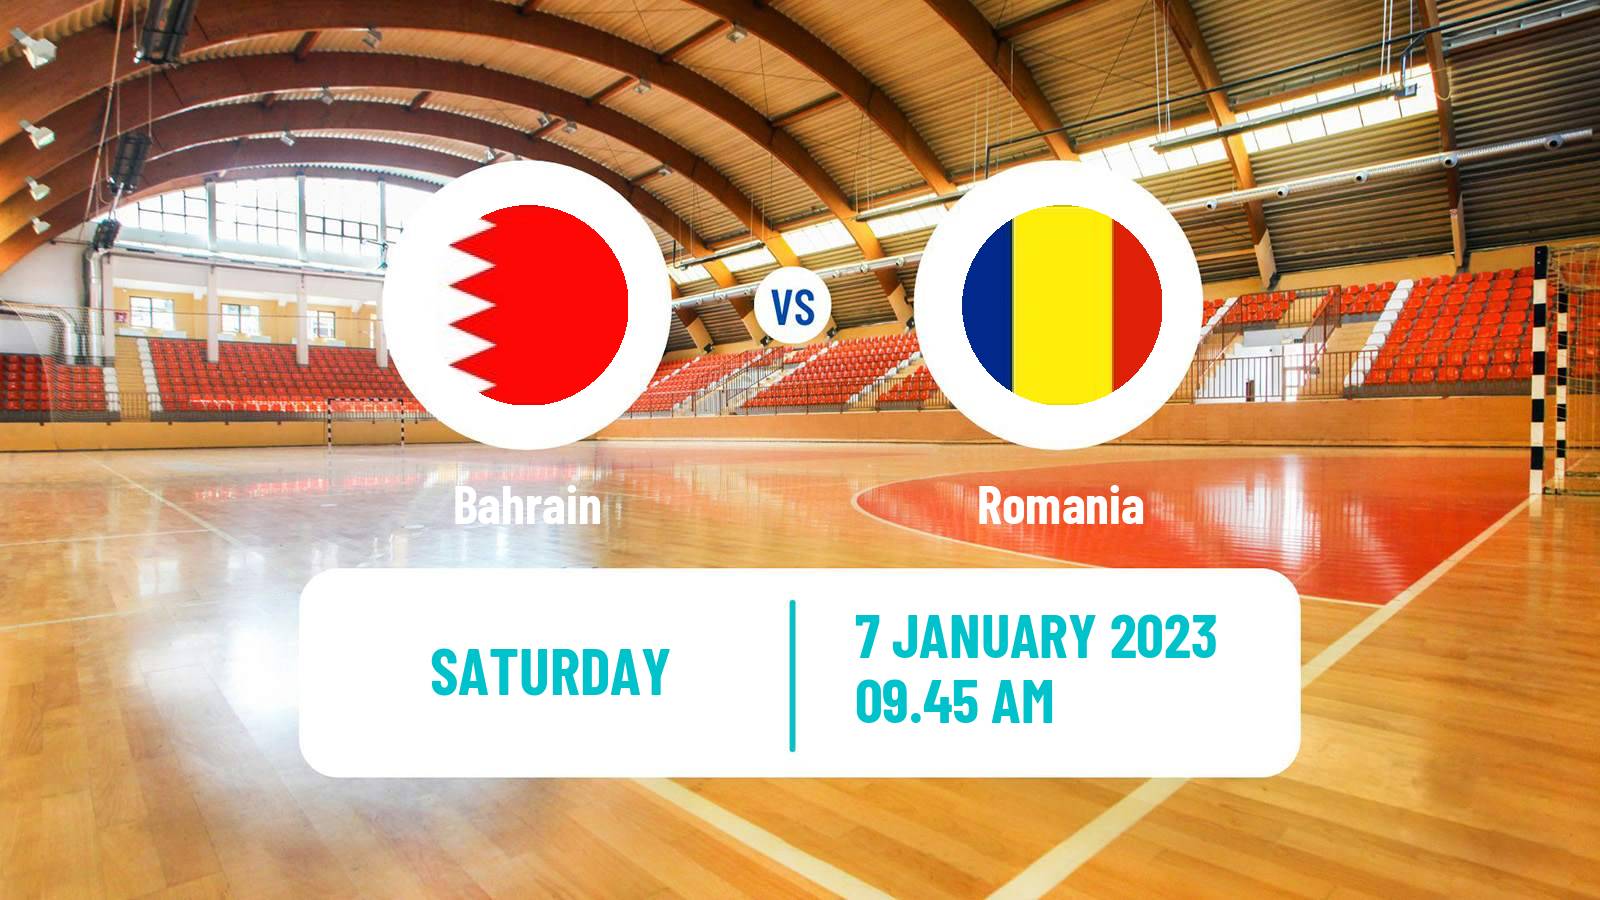 Handball Friendly International Handball Bahrain - Romania